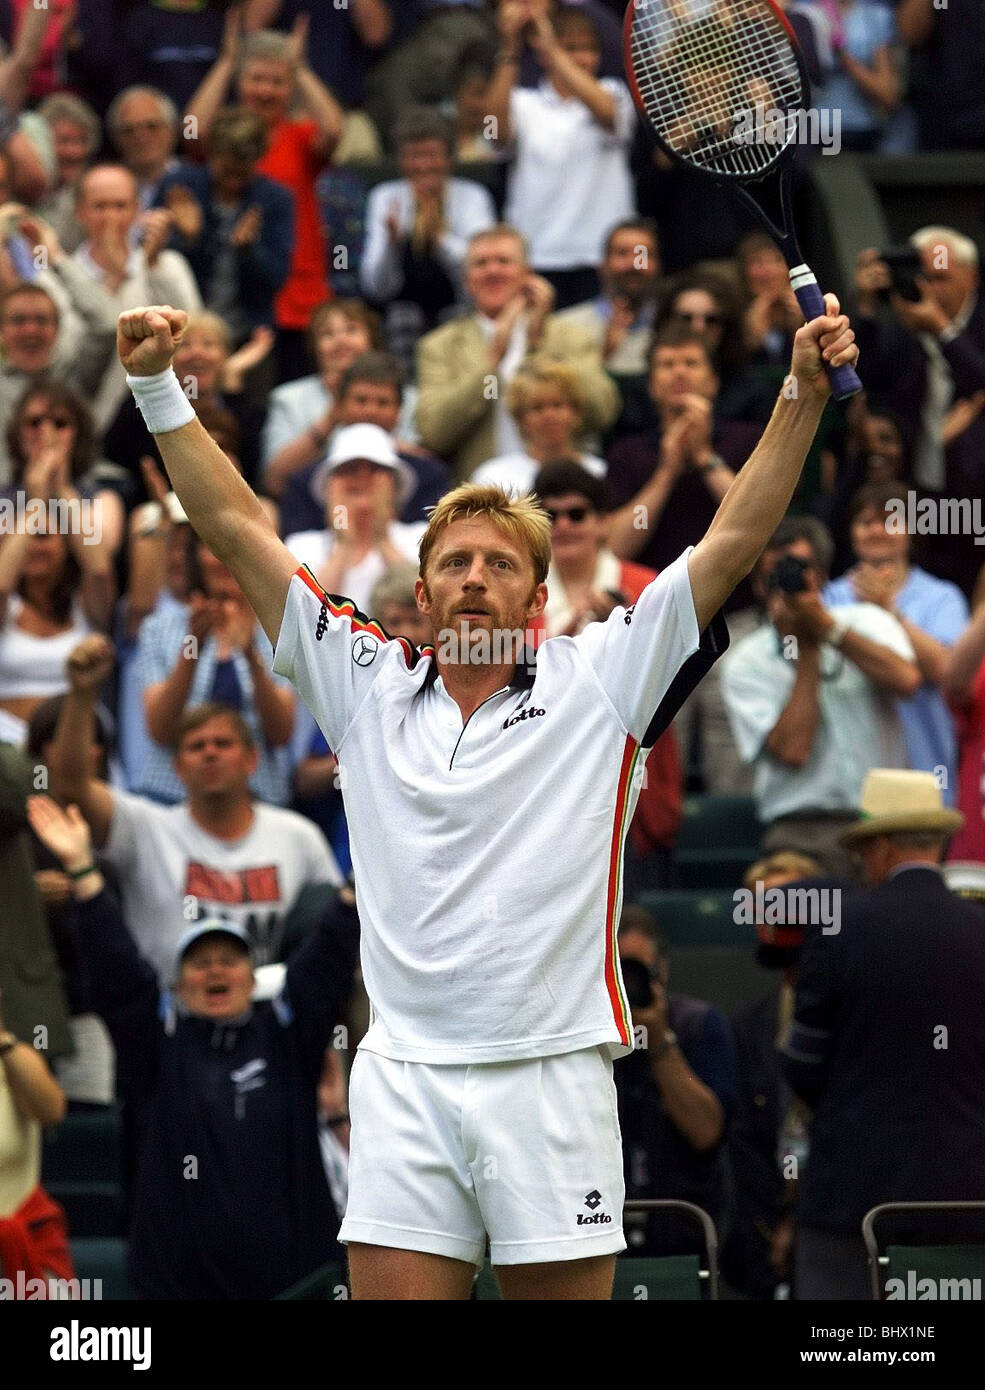 Boris Becker celebrates victory over Nicolas Kiefer in second round mens single's match of Wimbledon Tennis Championship 1999 Stock Photo